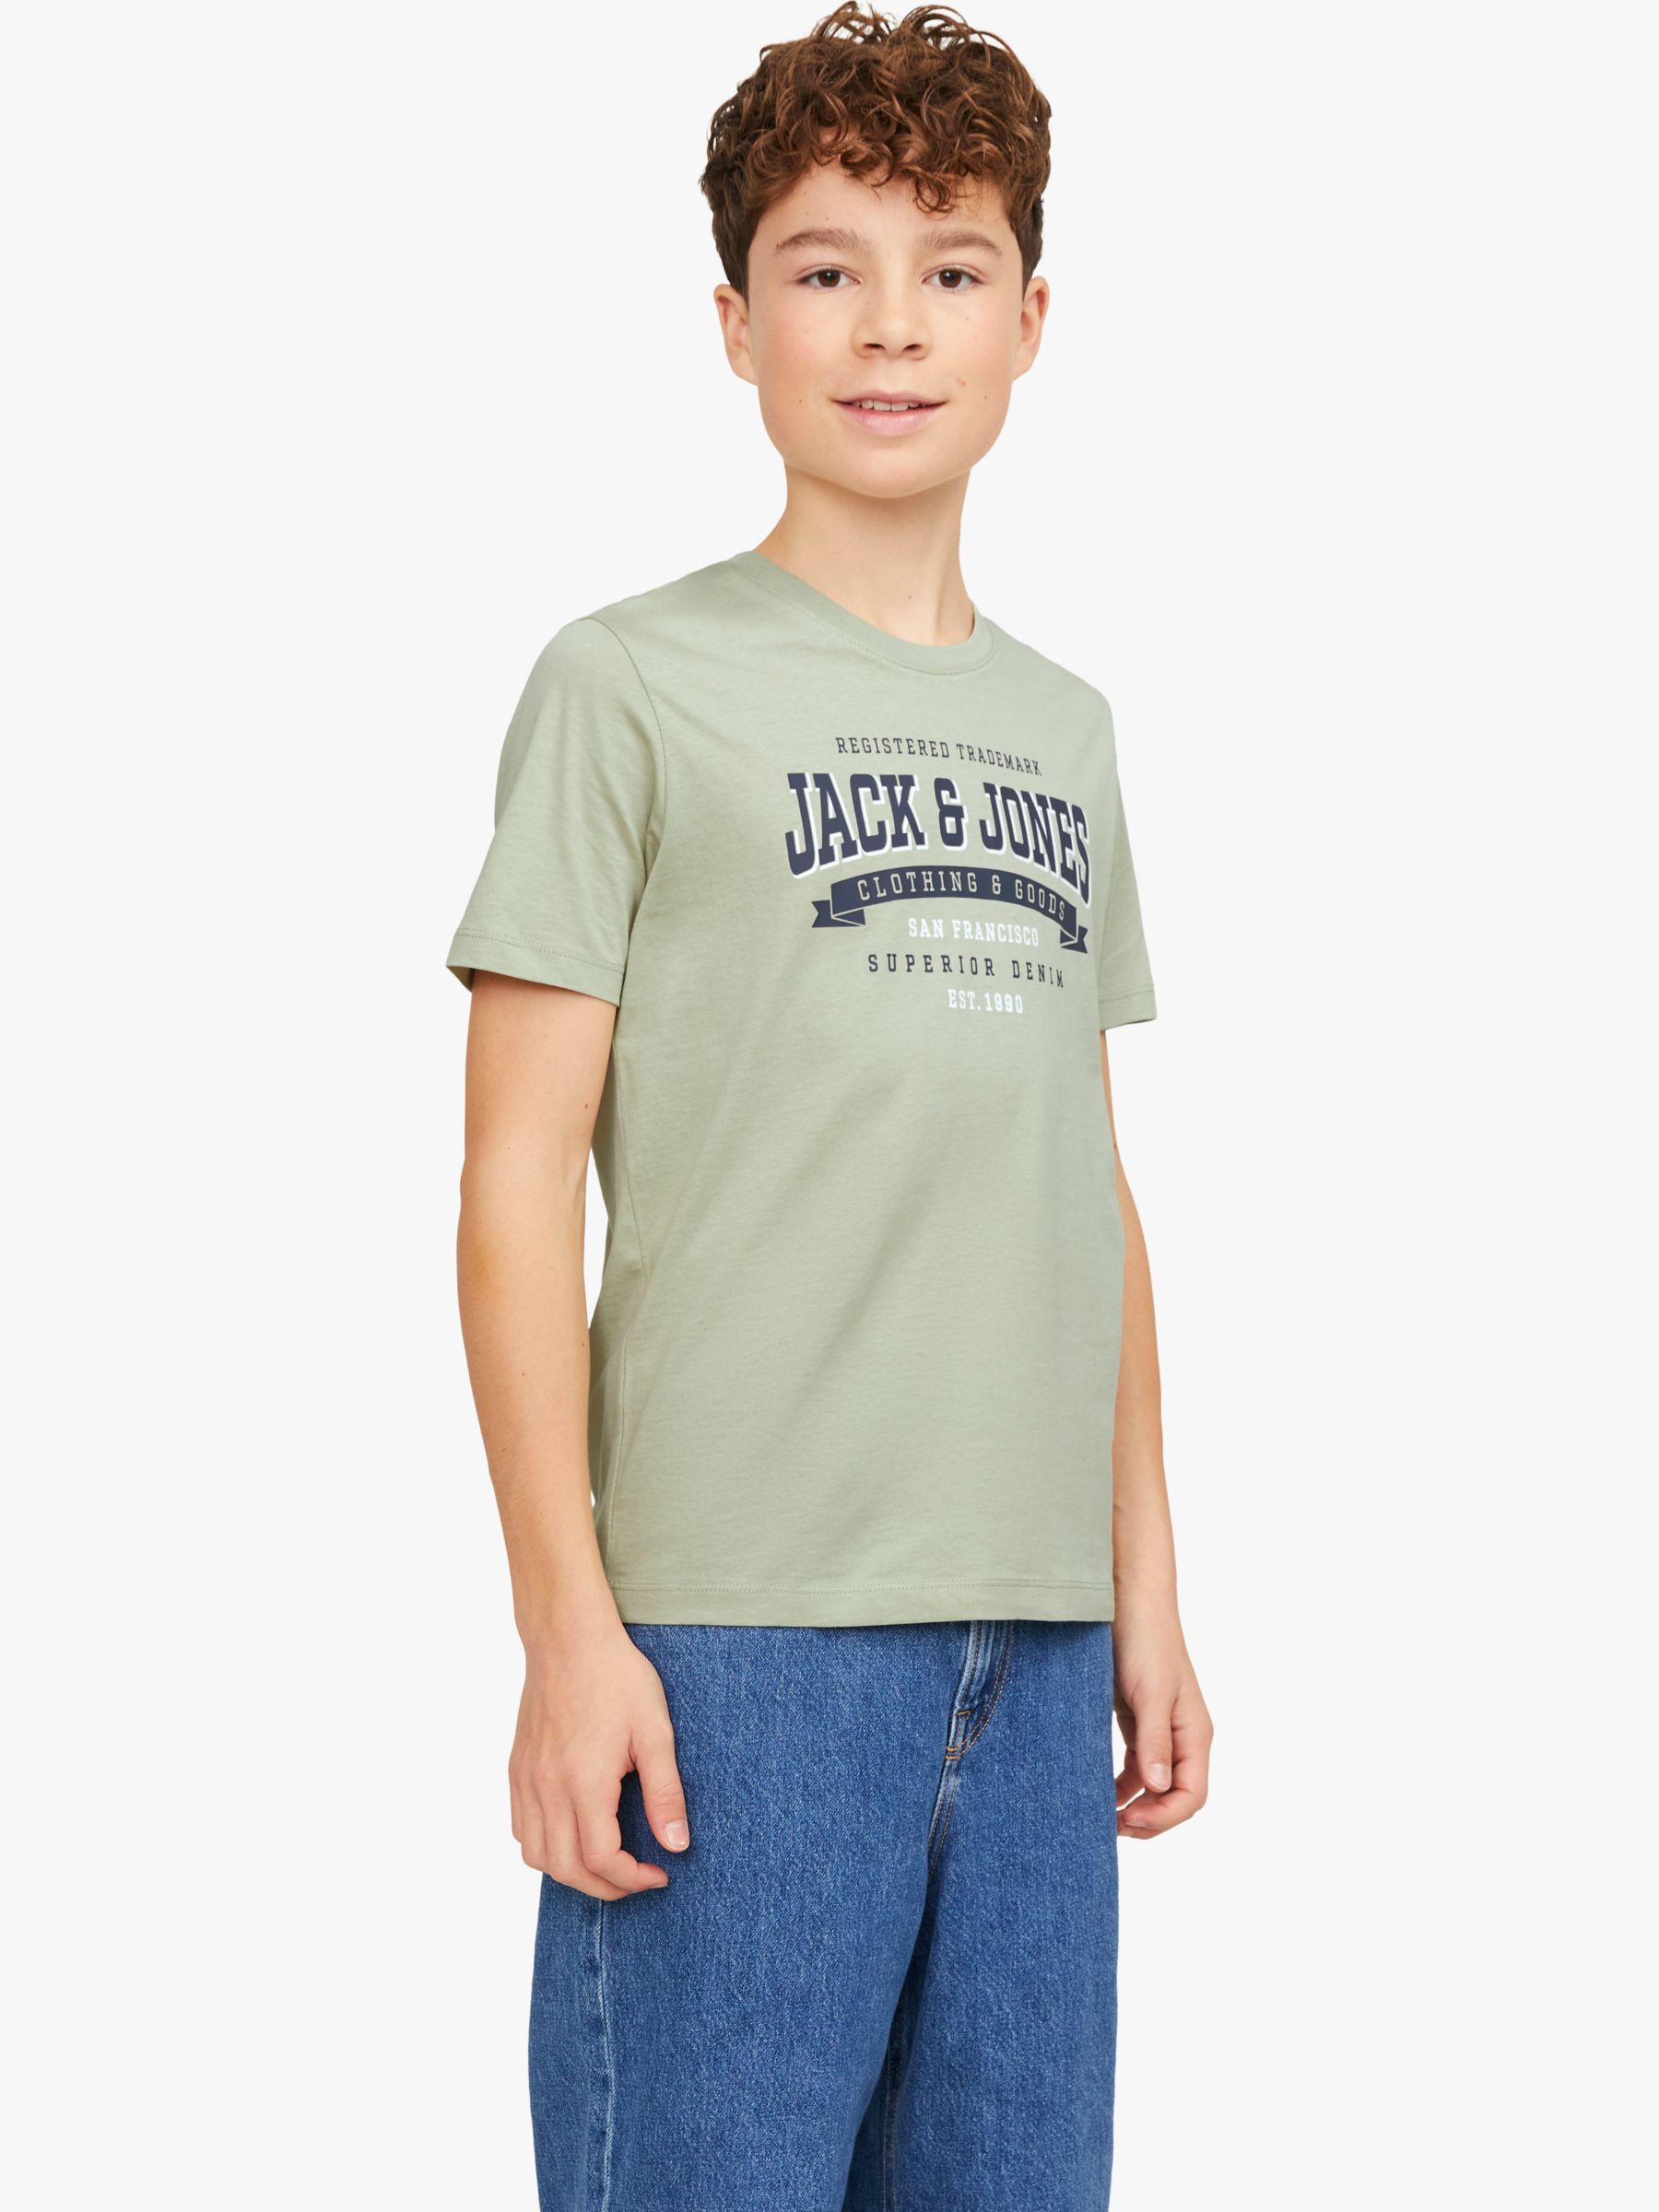 Jack & Jones Logo Organic Cotton Short Sleeve T-Shirt, Desert Sage, 14 years